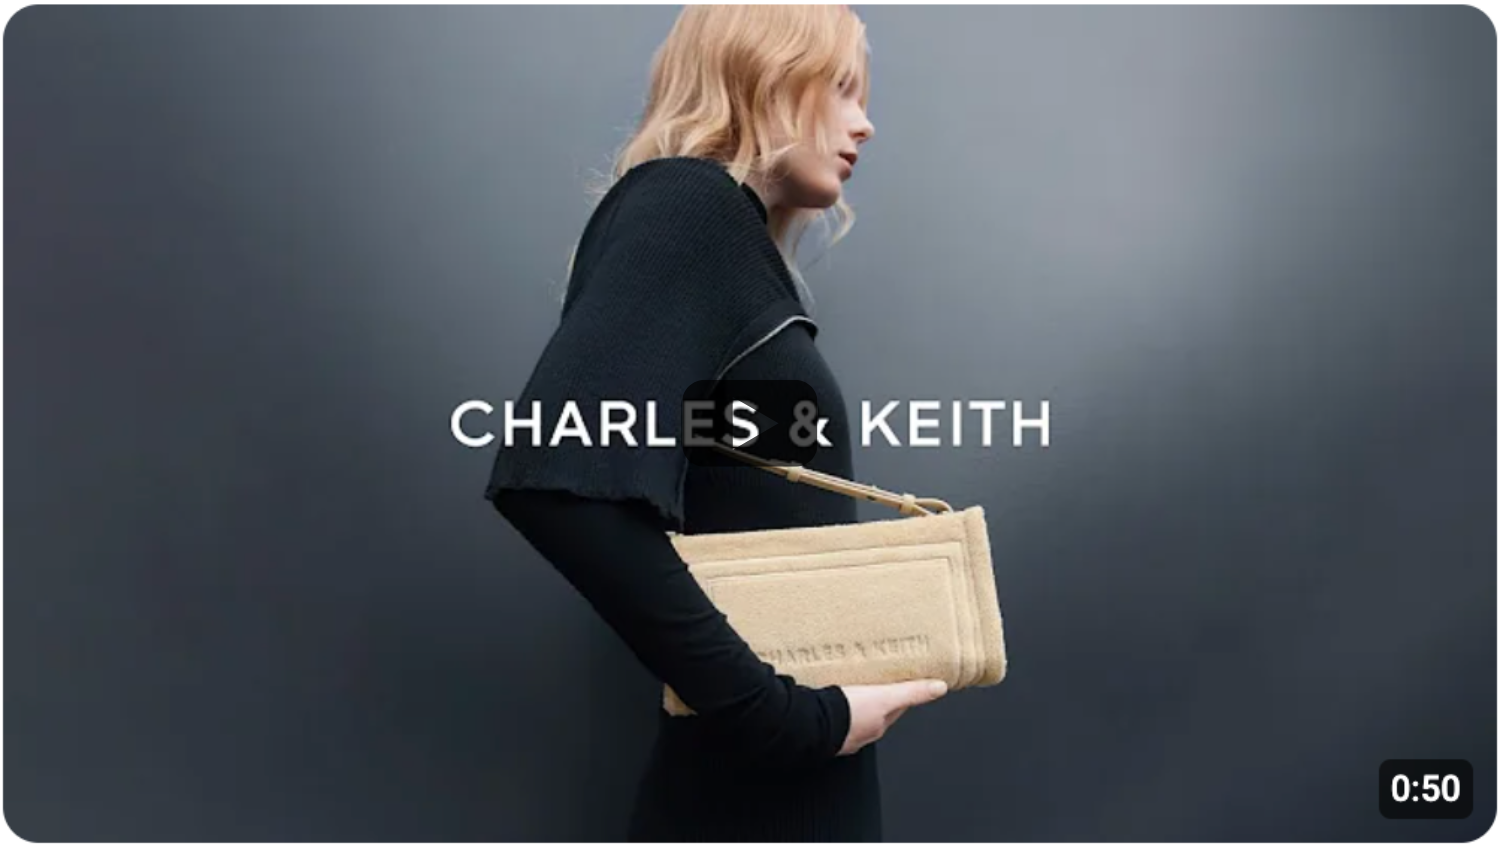 CHARLES & KEITH 優惠 CHARLES & KEITH 特賣 CHARLES & KEITH 折扣 CHARLES & KEITH 推薦 CHARLES & KEITH 配飾 CHARLES & KEITH 鞋款 CHARLES & KEITH 包包 CHARLES & KEITH 新款